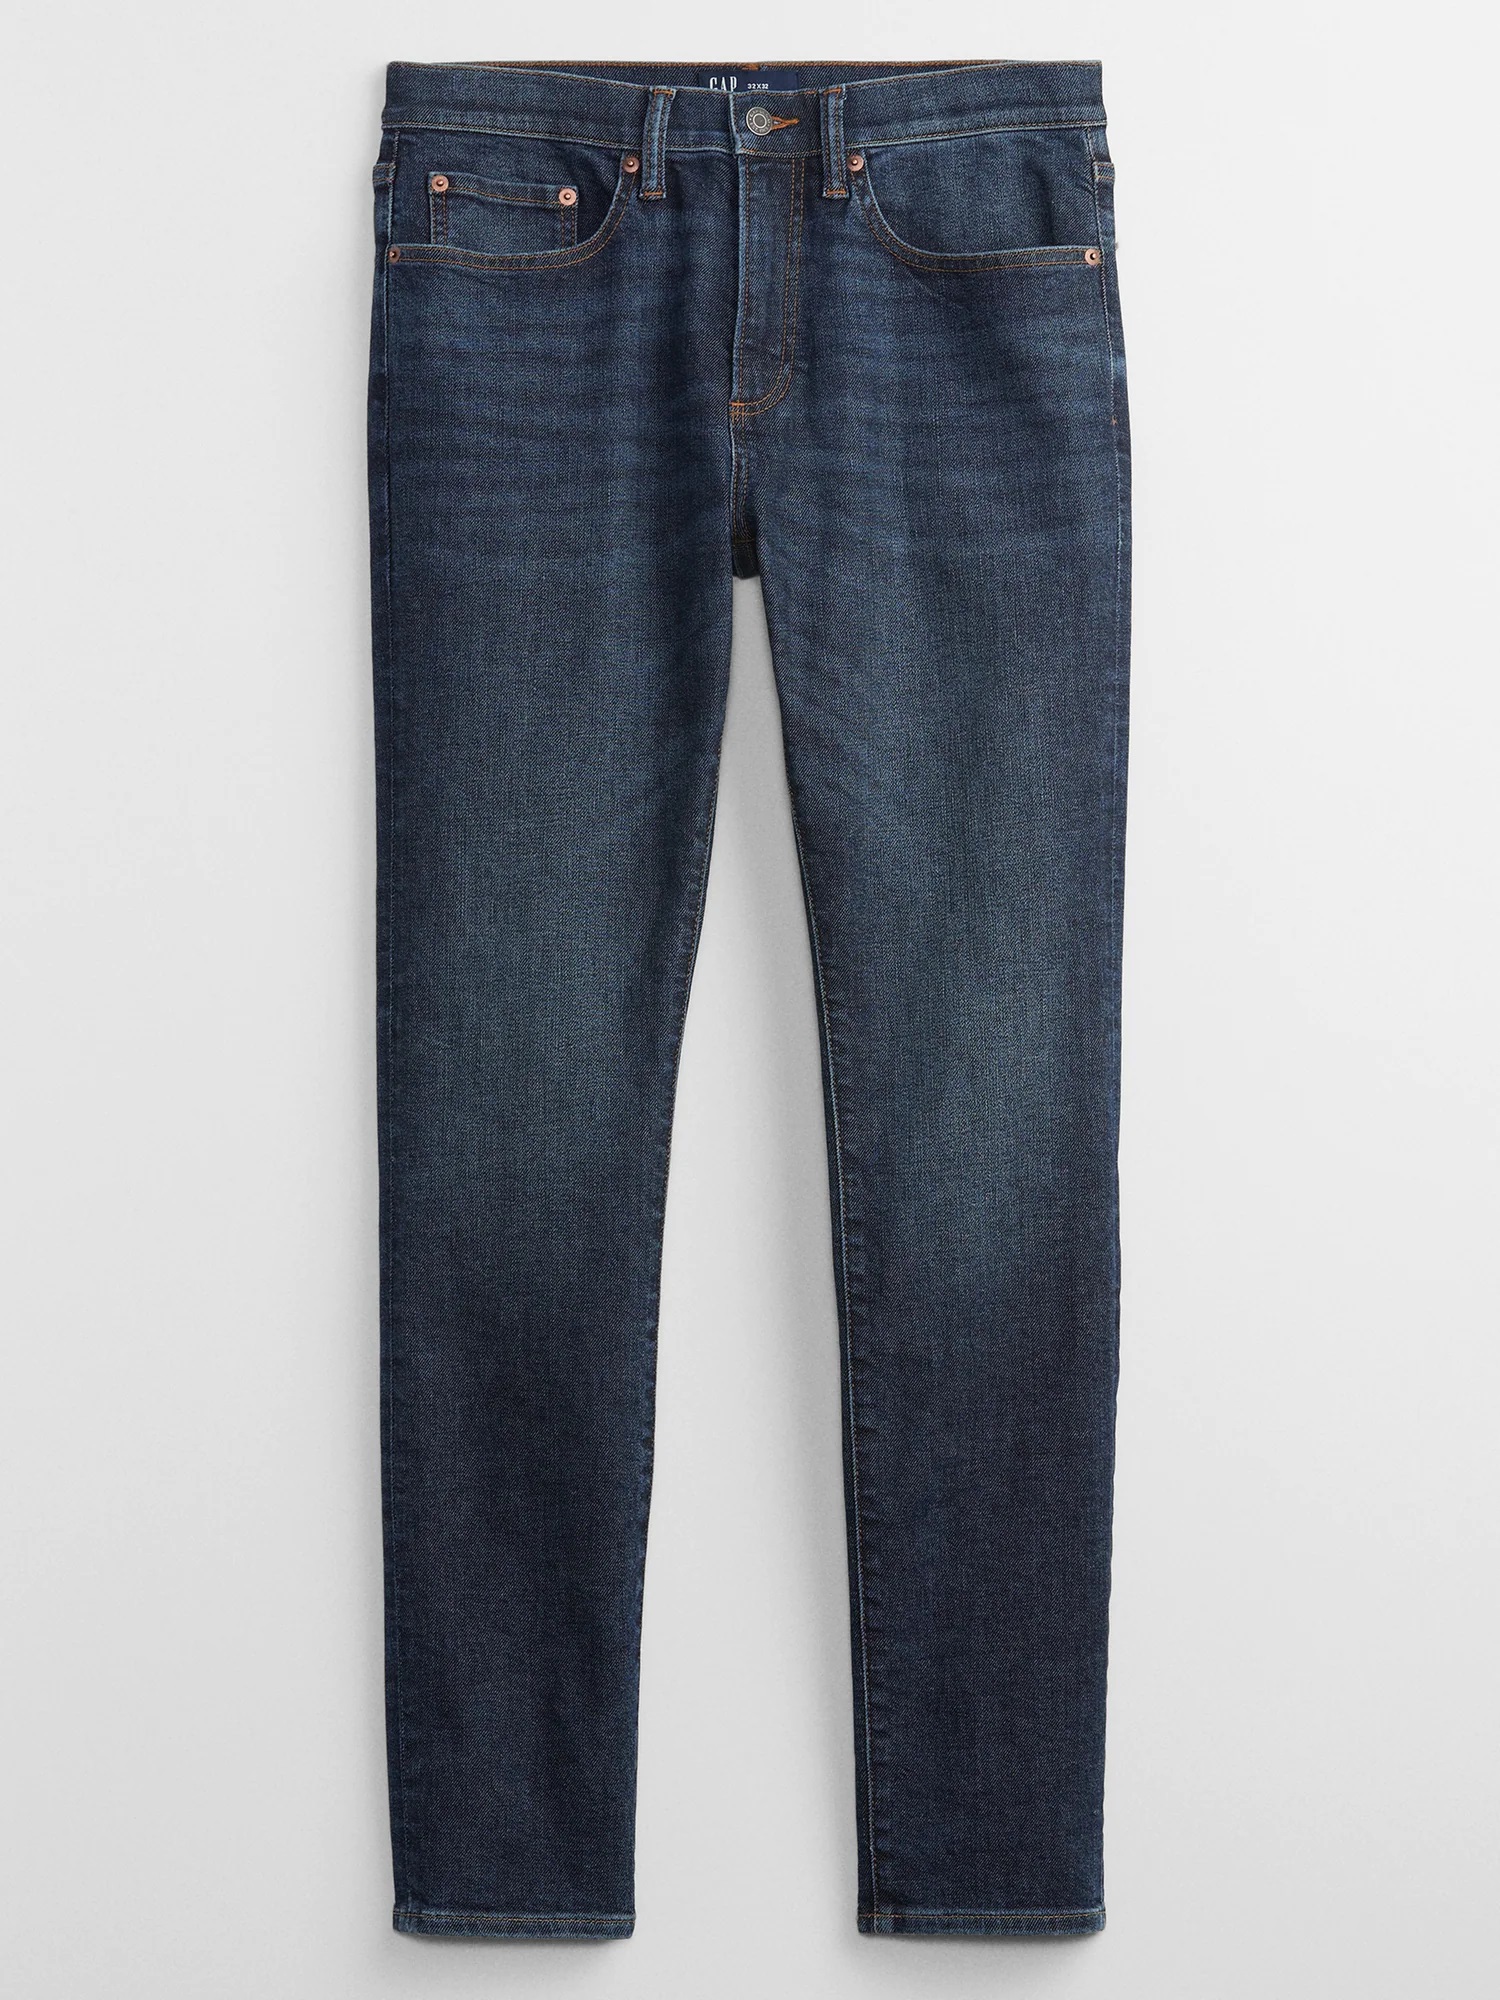 GAP Skinny Soft High Stretch Jeans - Men's